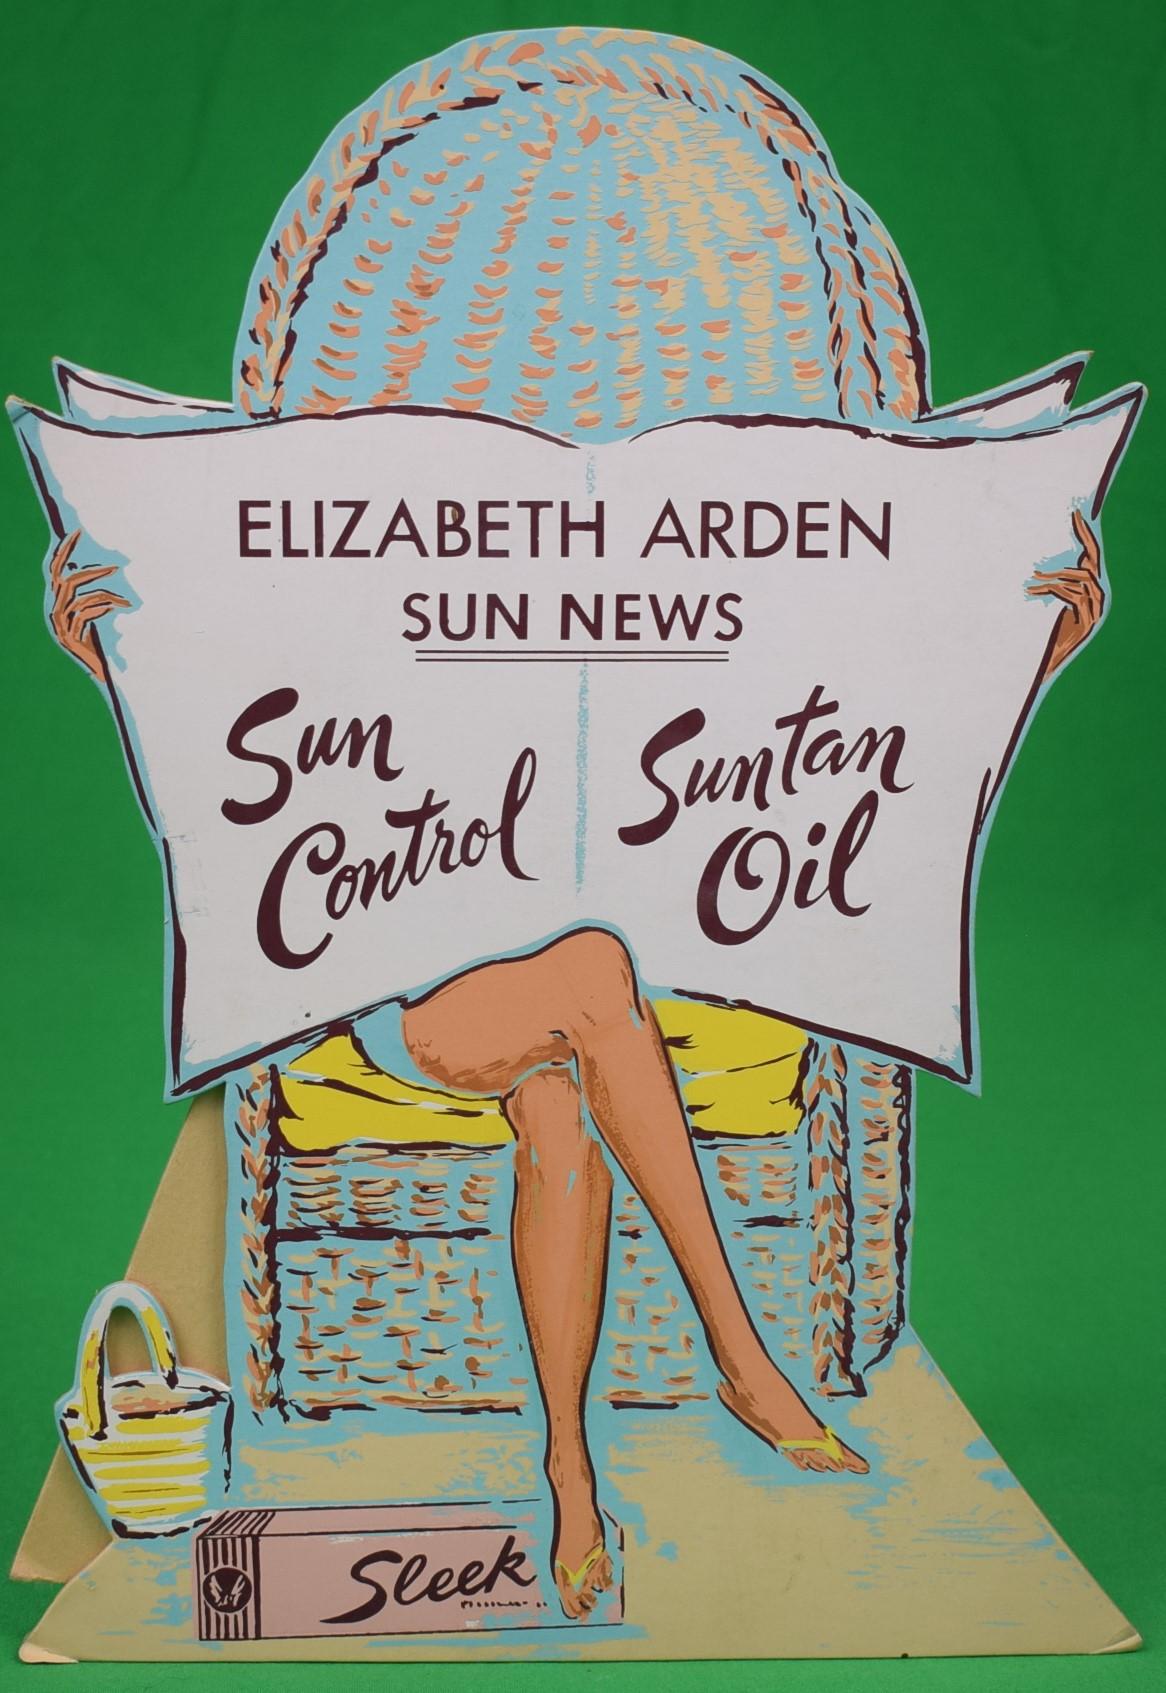 "Elizabeth Arden Sun News Sun Control/ Suntan Oil c1950s 3-D Advert Sign"